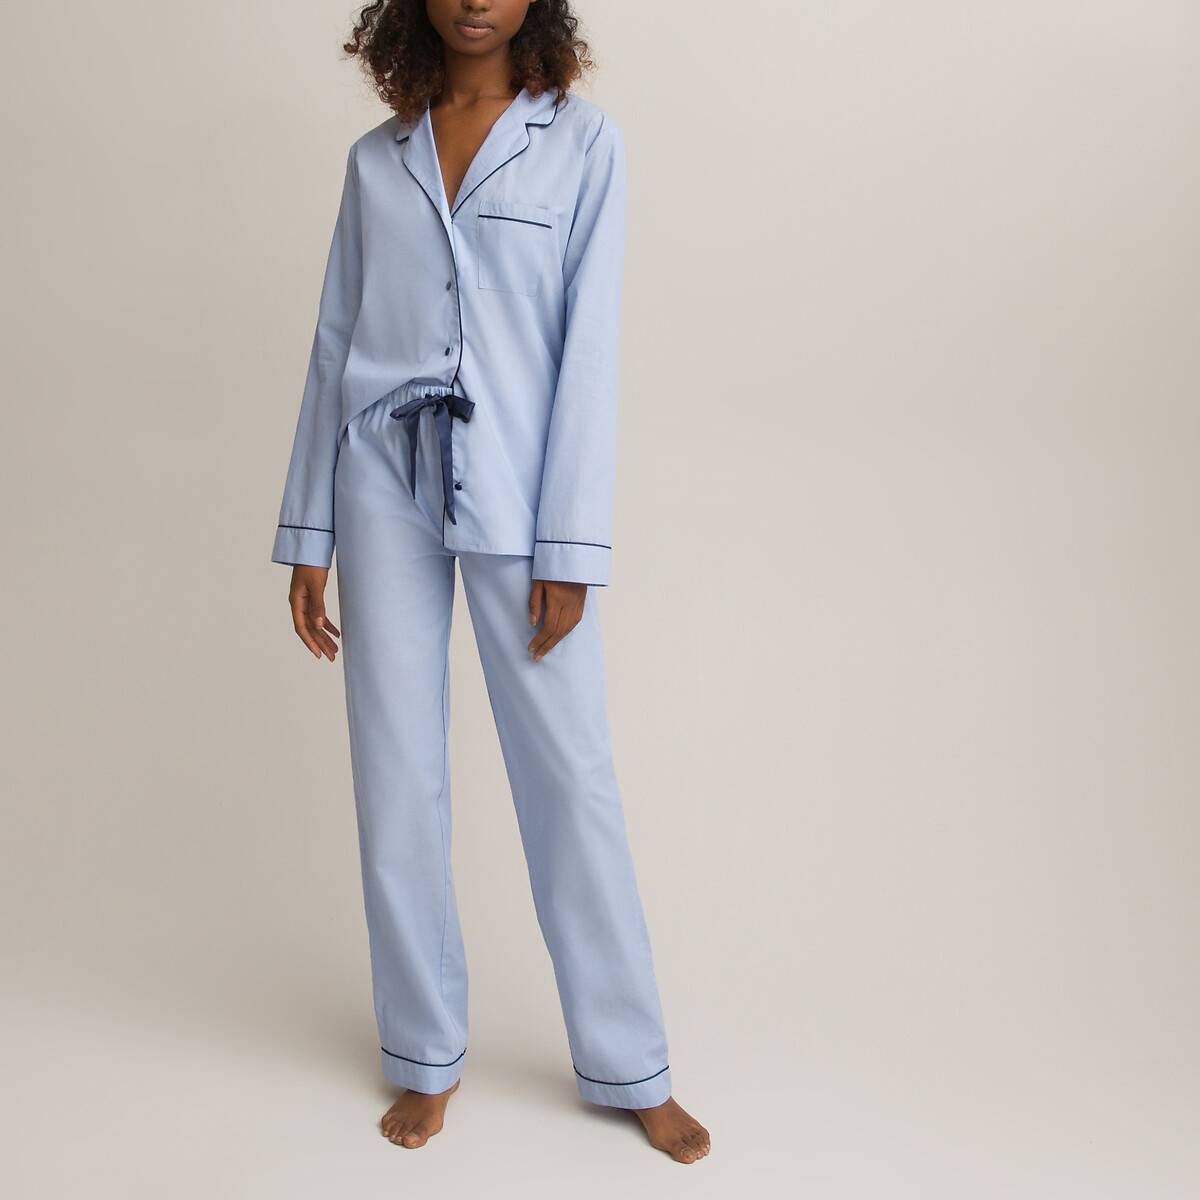 Pijama LaRedoute, 19,99€